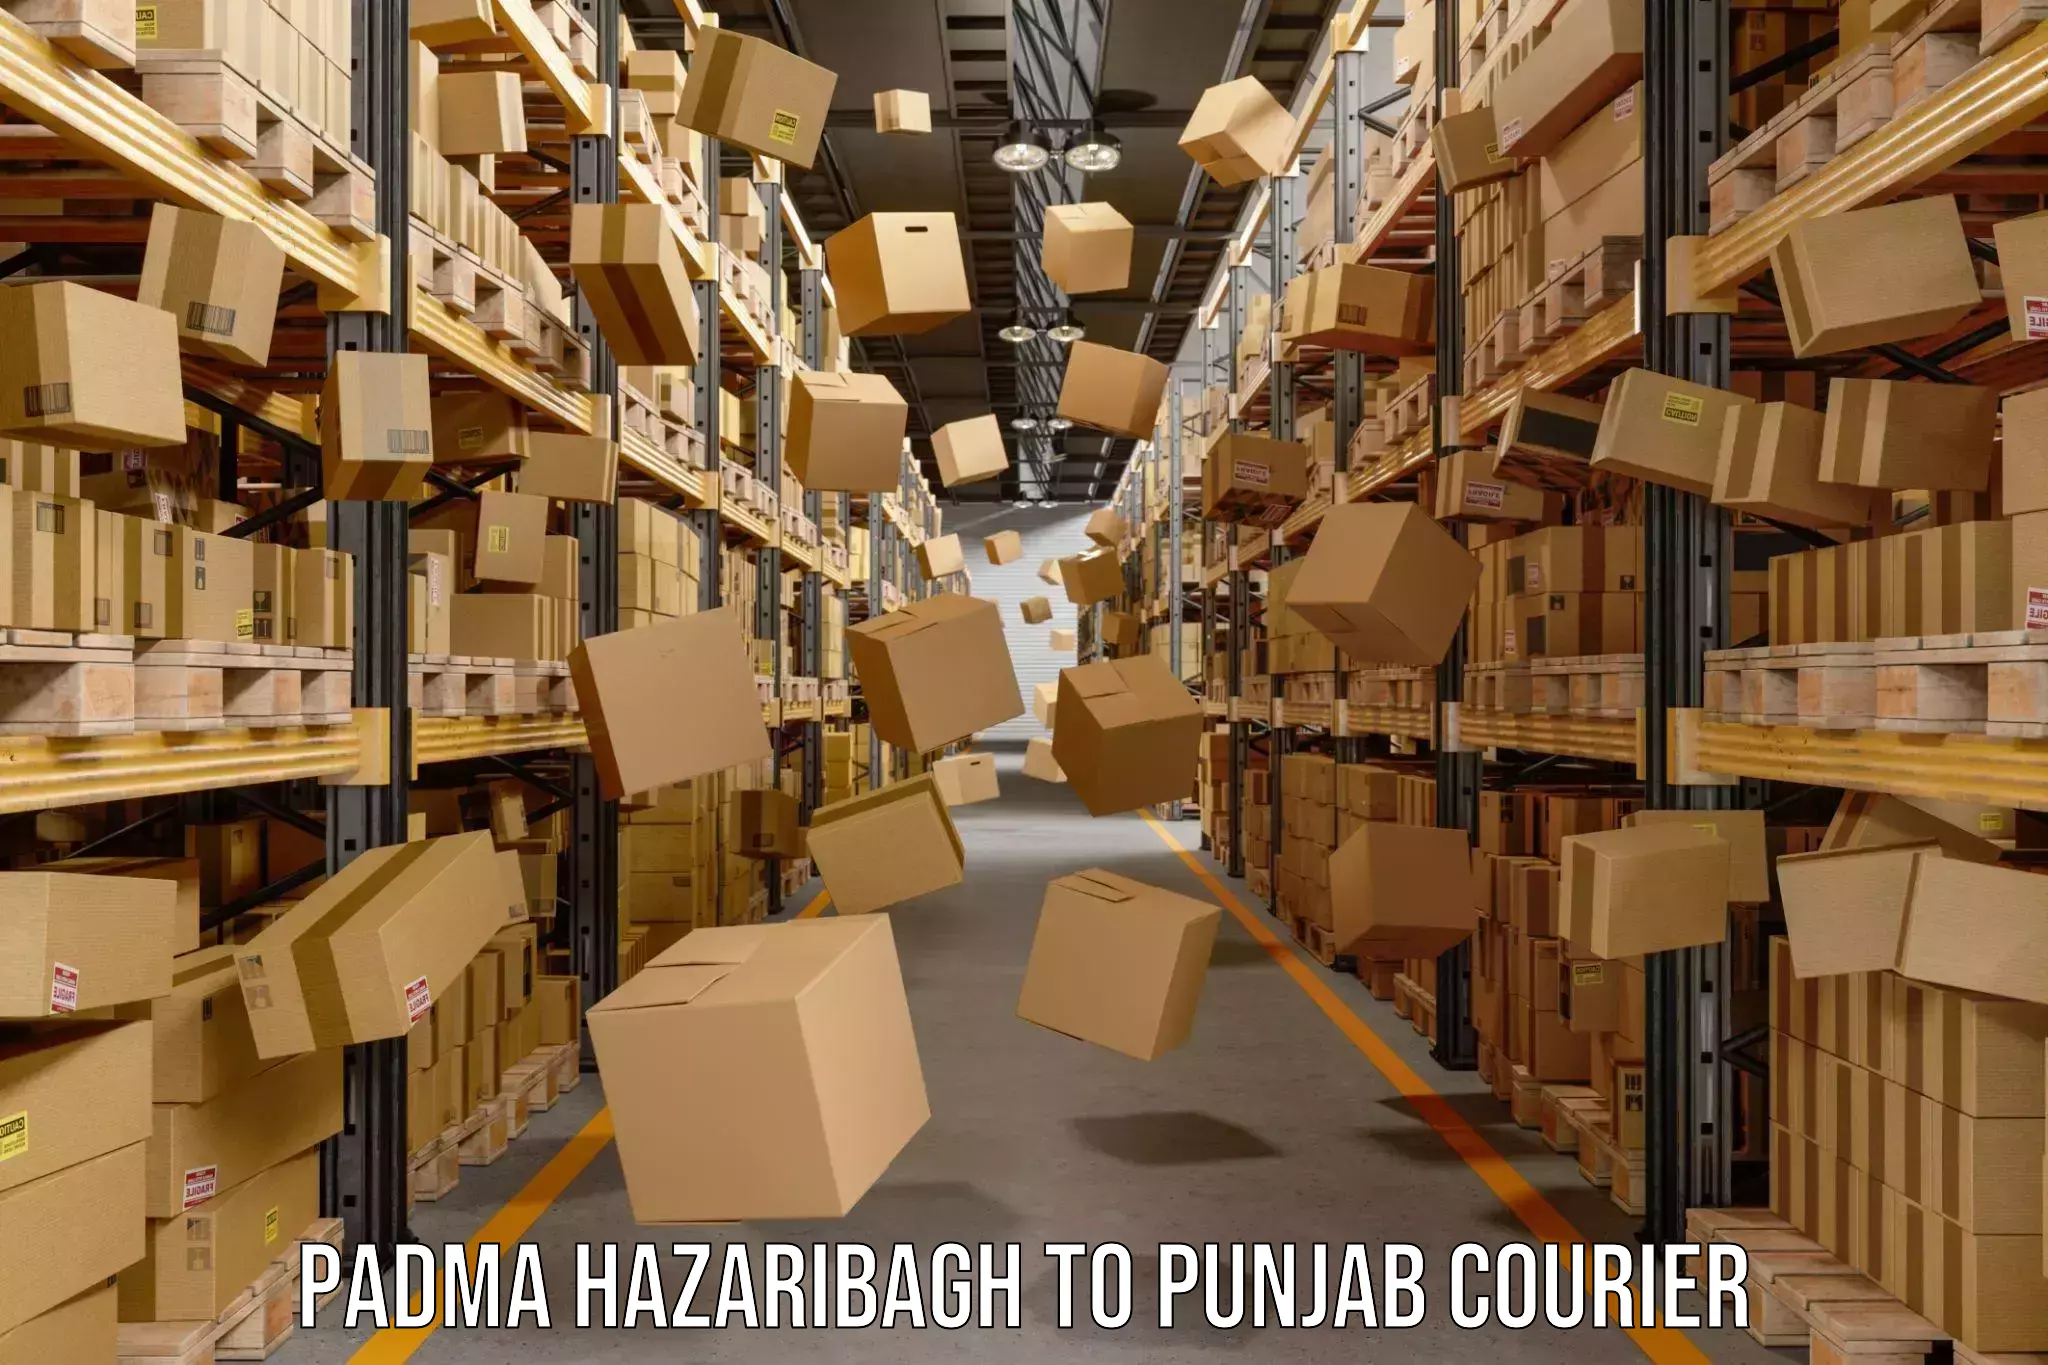 Courier app Padma Hazaribagh to Phillaur